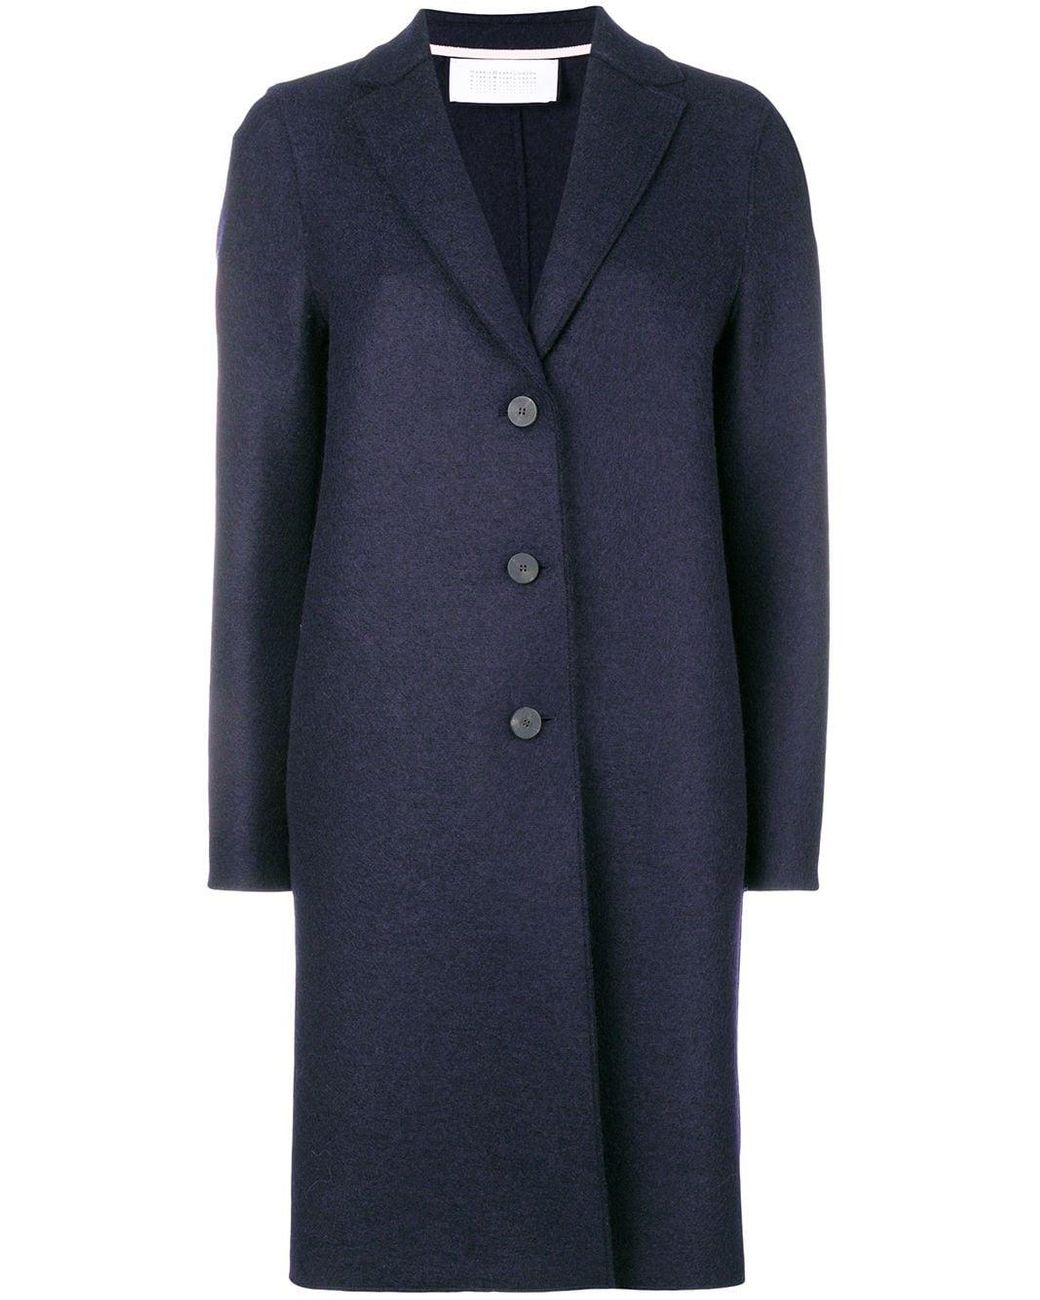 Harris Wharf London Wool Single Breasted Coat in Blue - Lyst